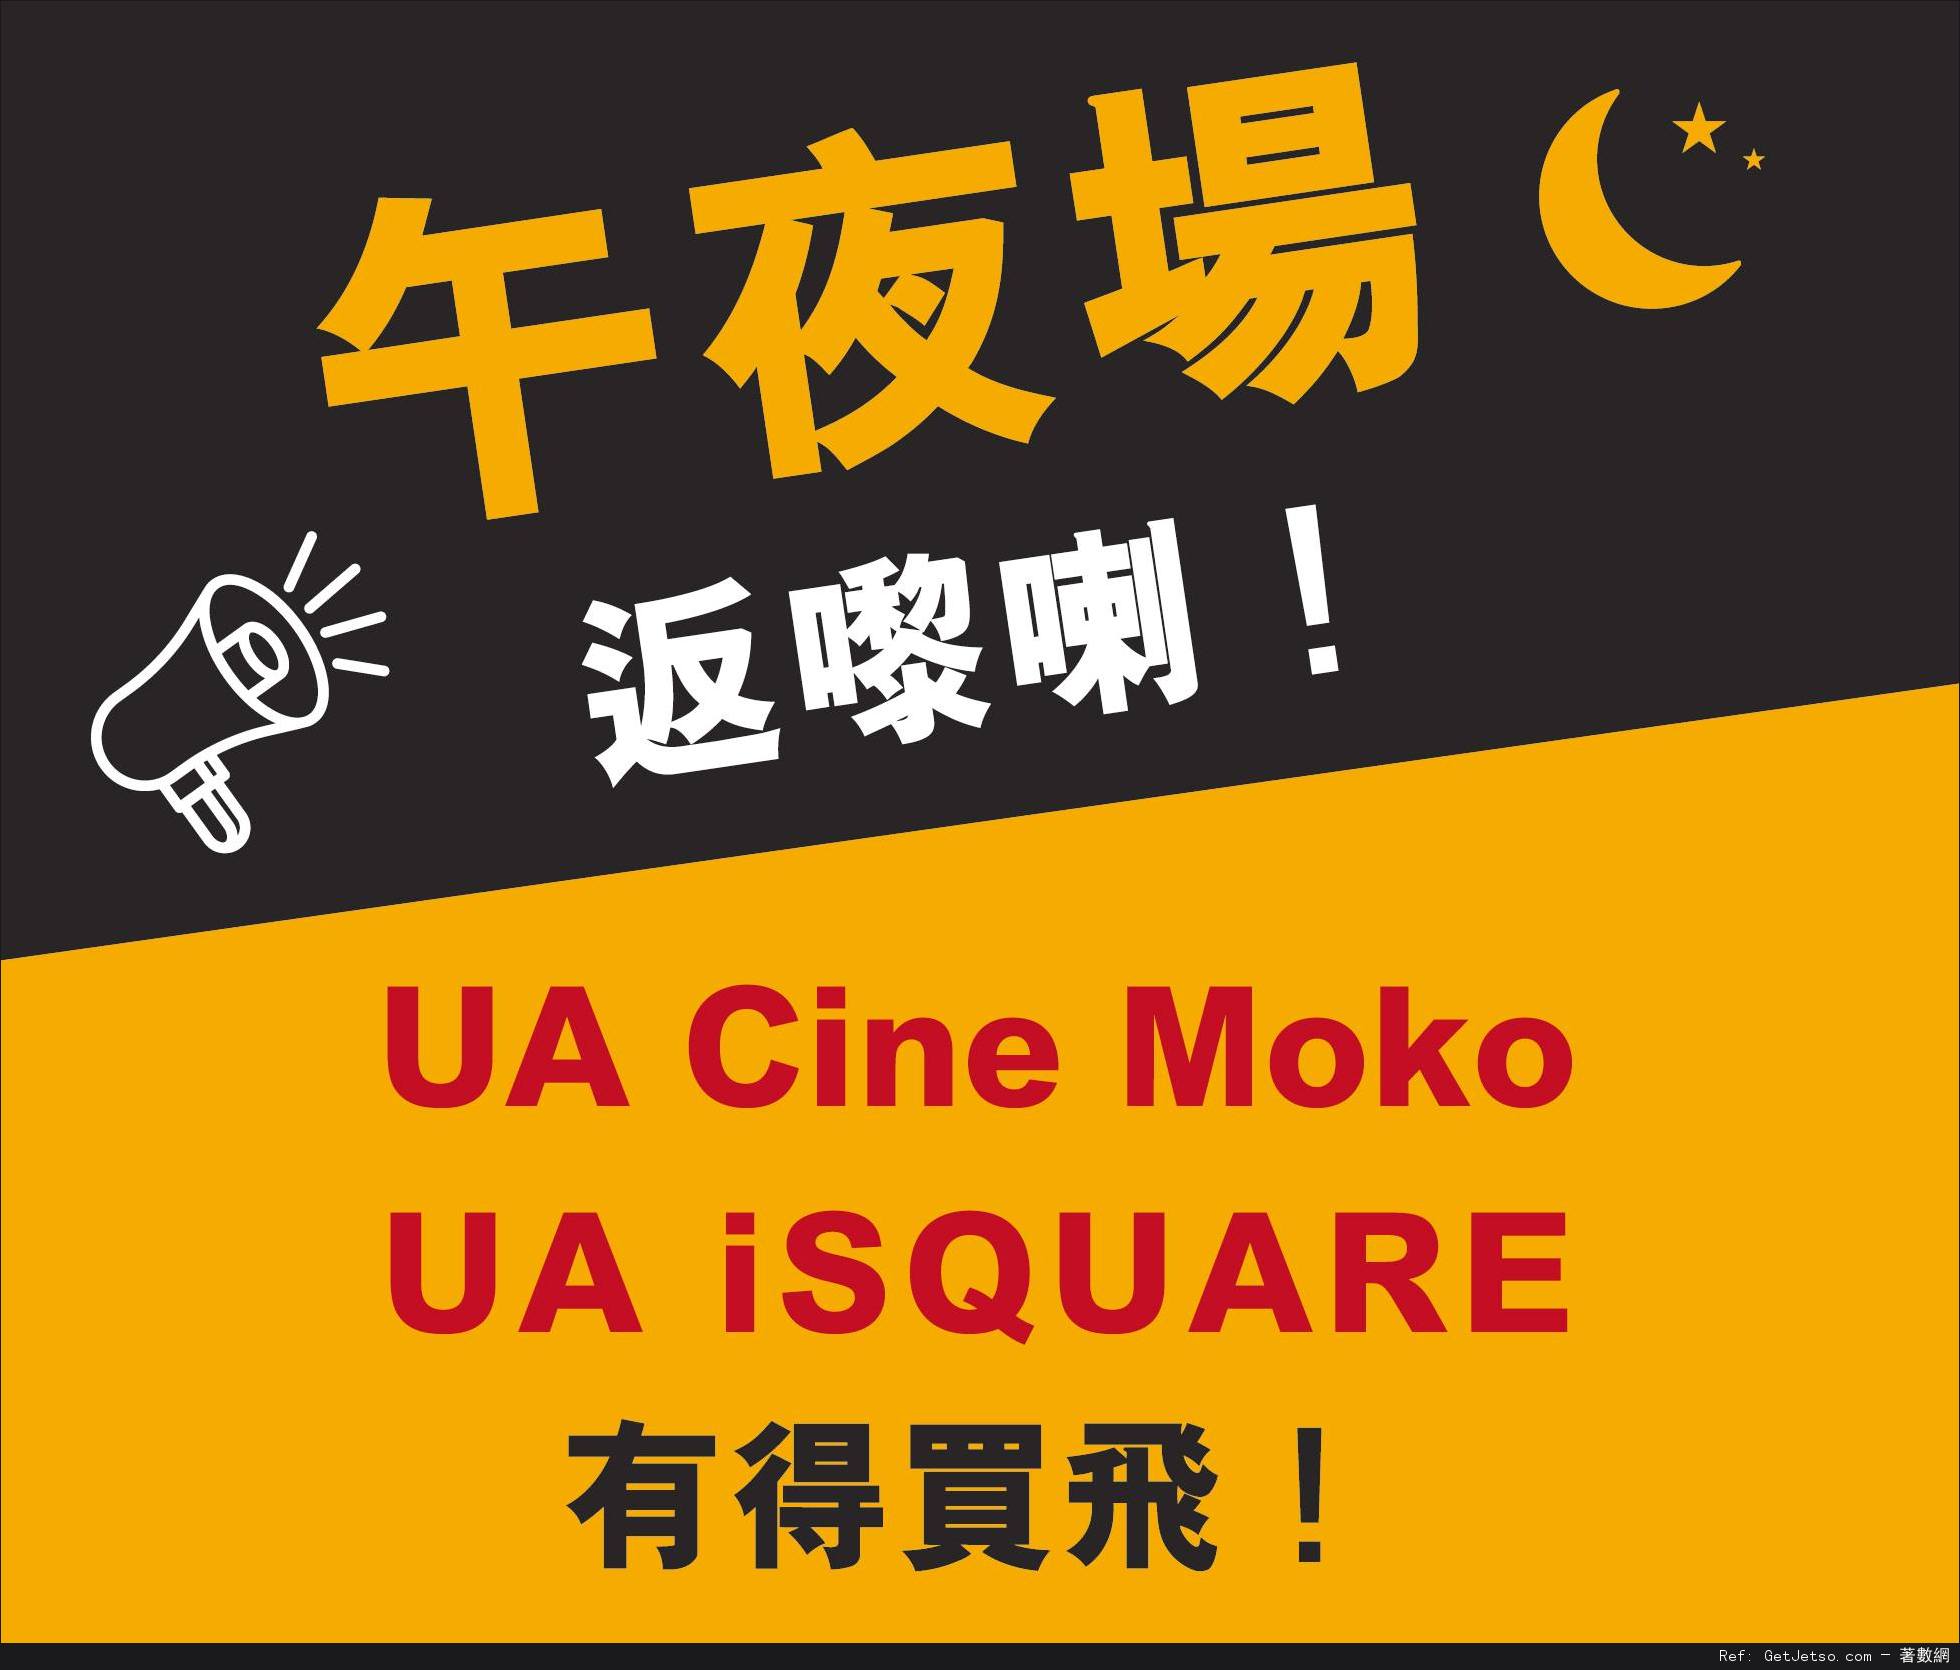 UA Cine Moko同UA iSQUARE午夜場優惠(至16年5月28日)圖片1